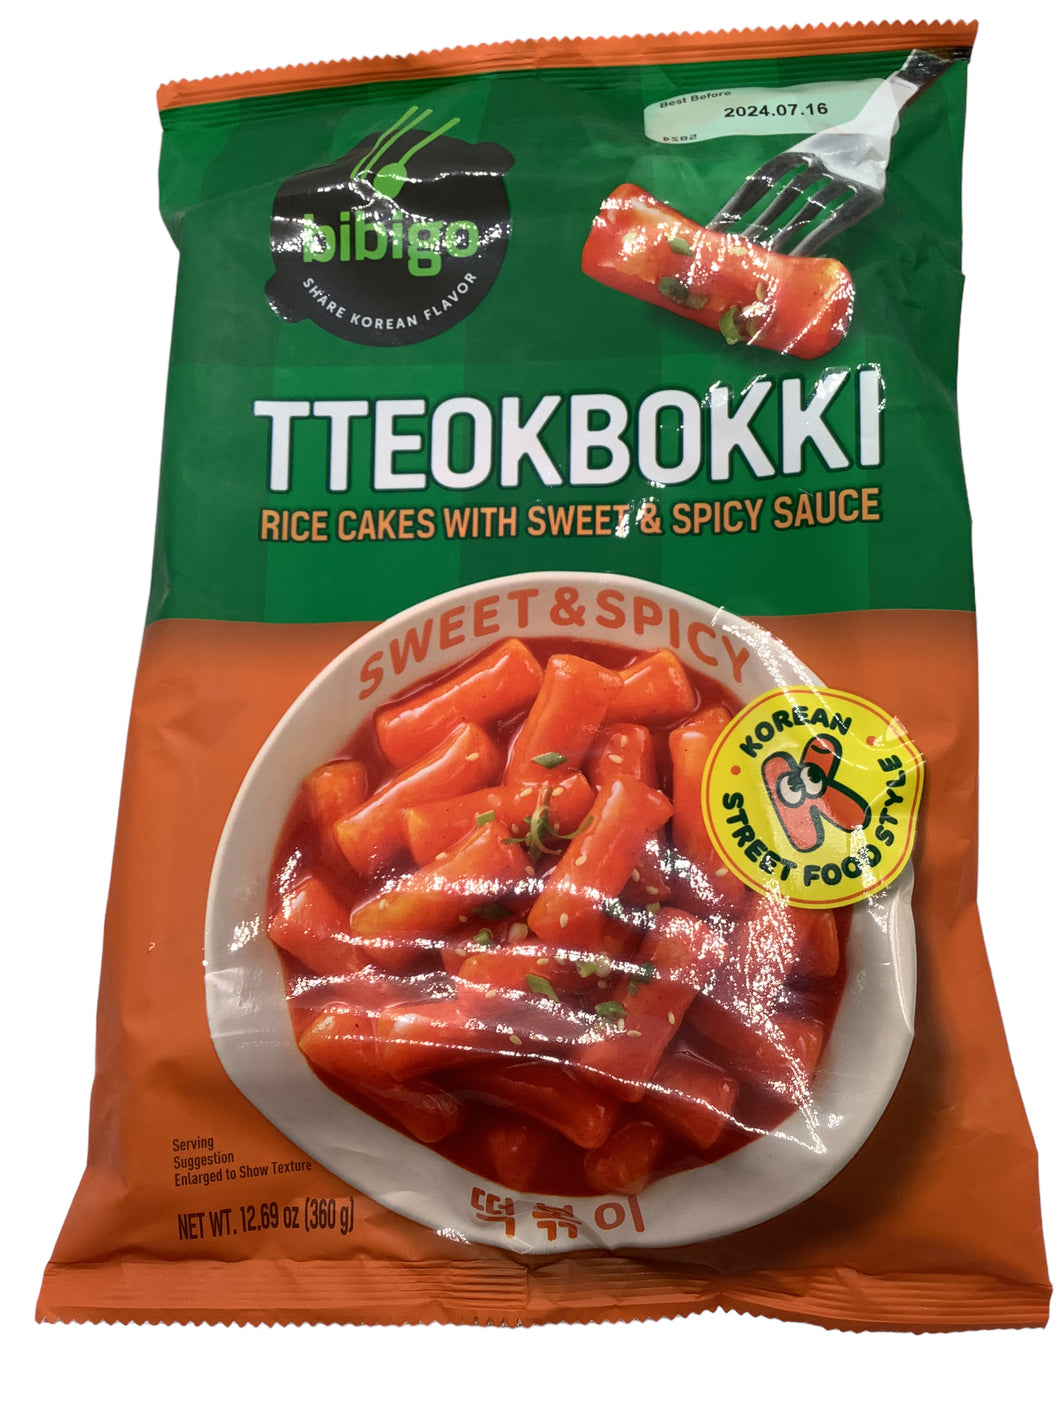 Bibigo Tteokbokki Rice Cakes With Sweet & Spicy Sauce